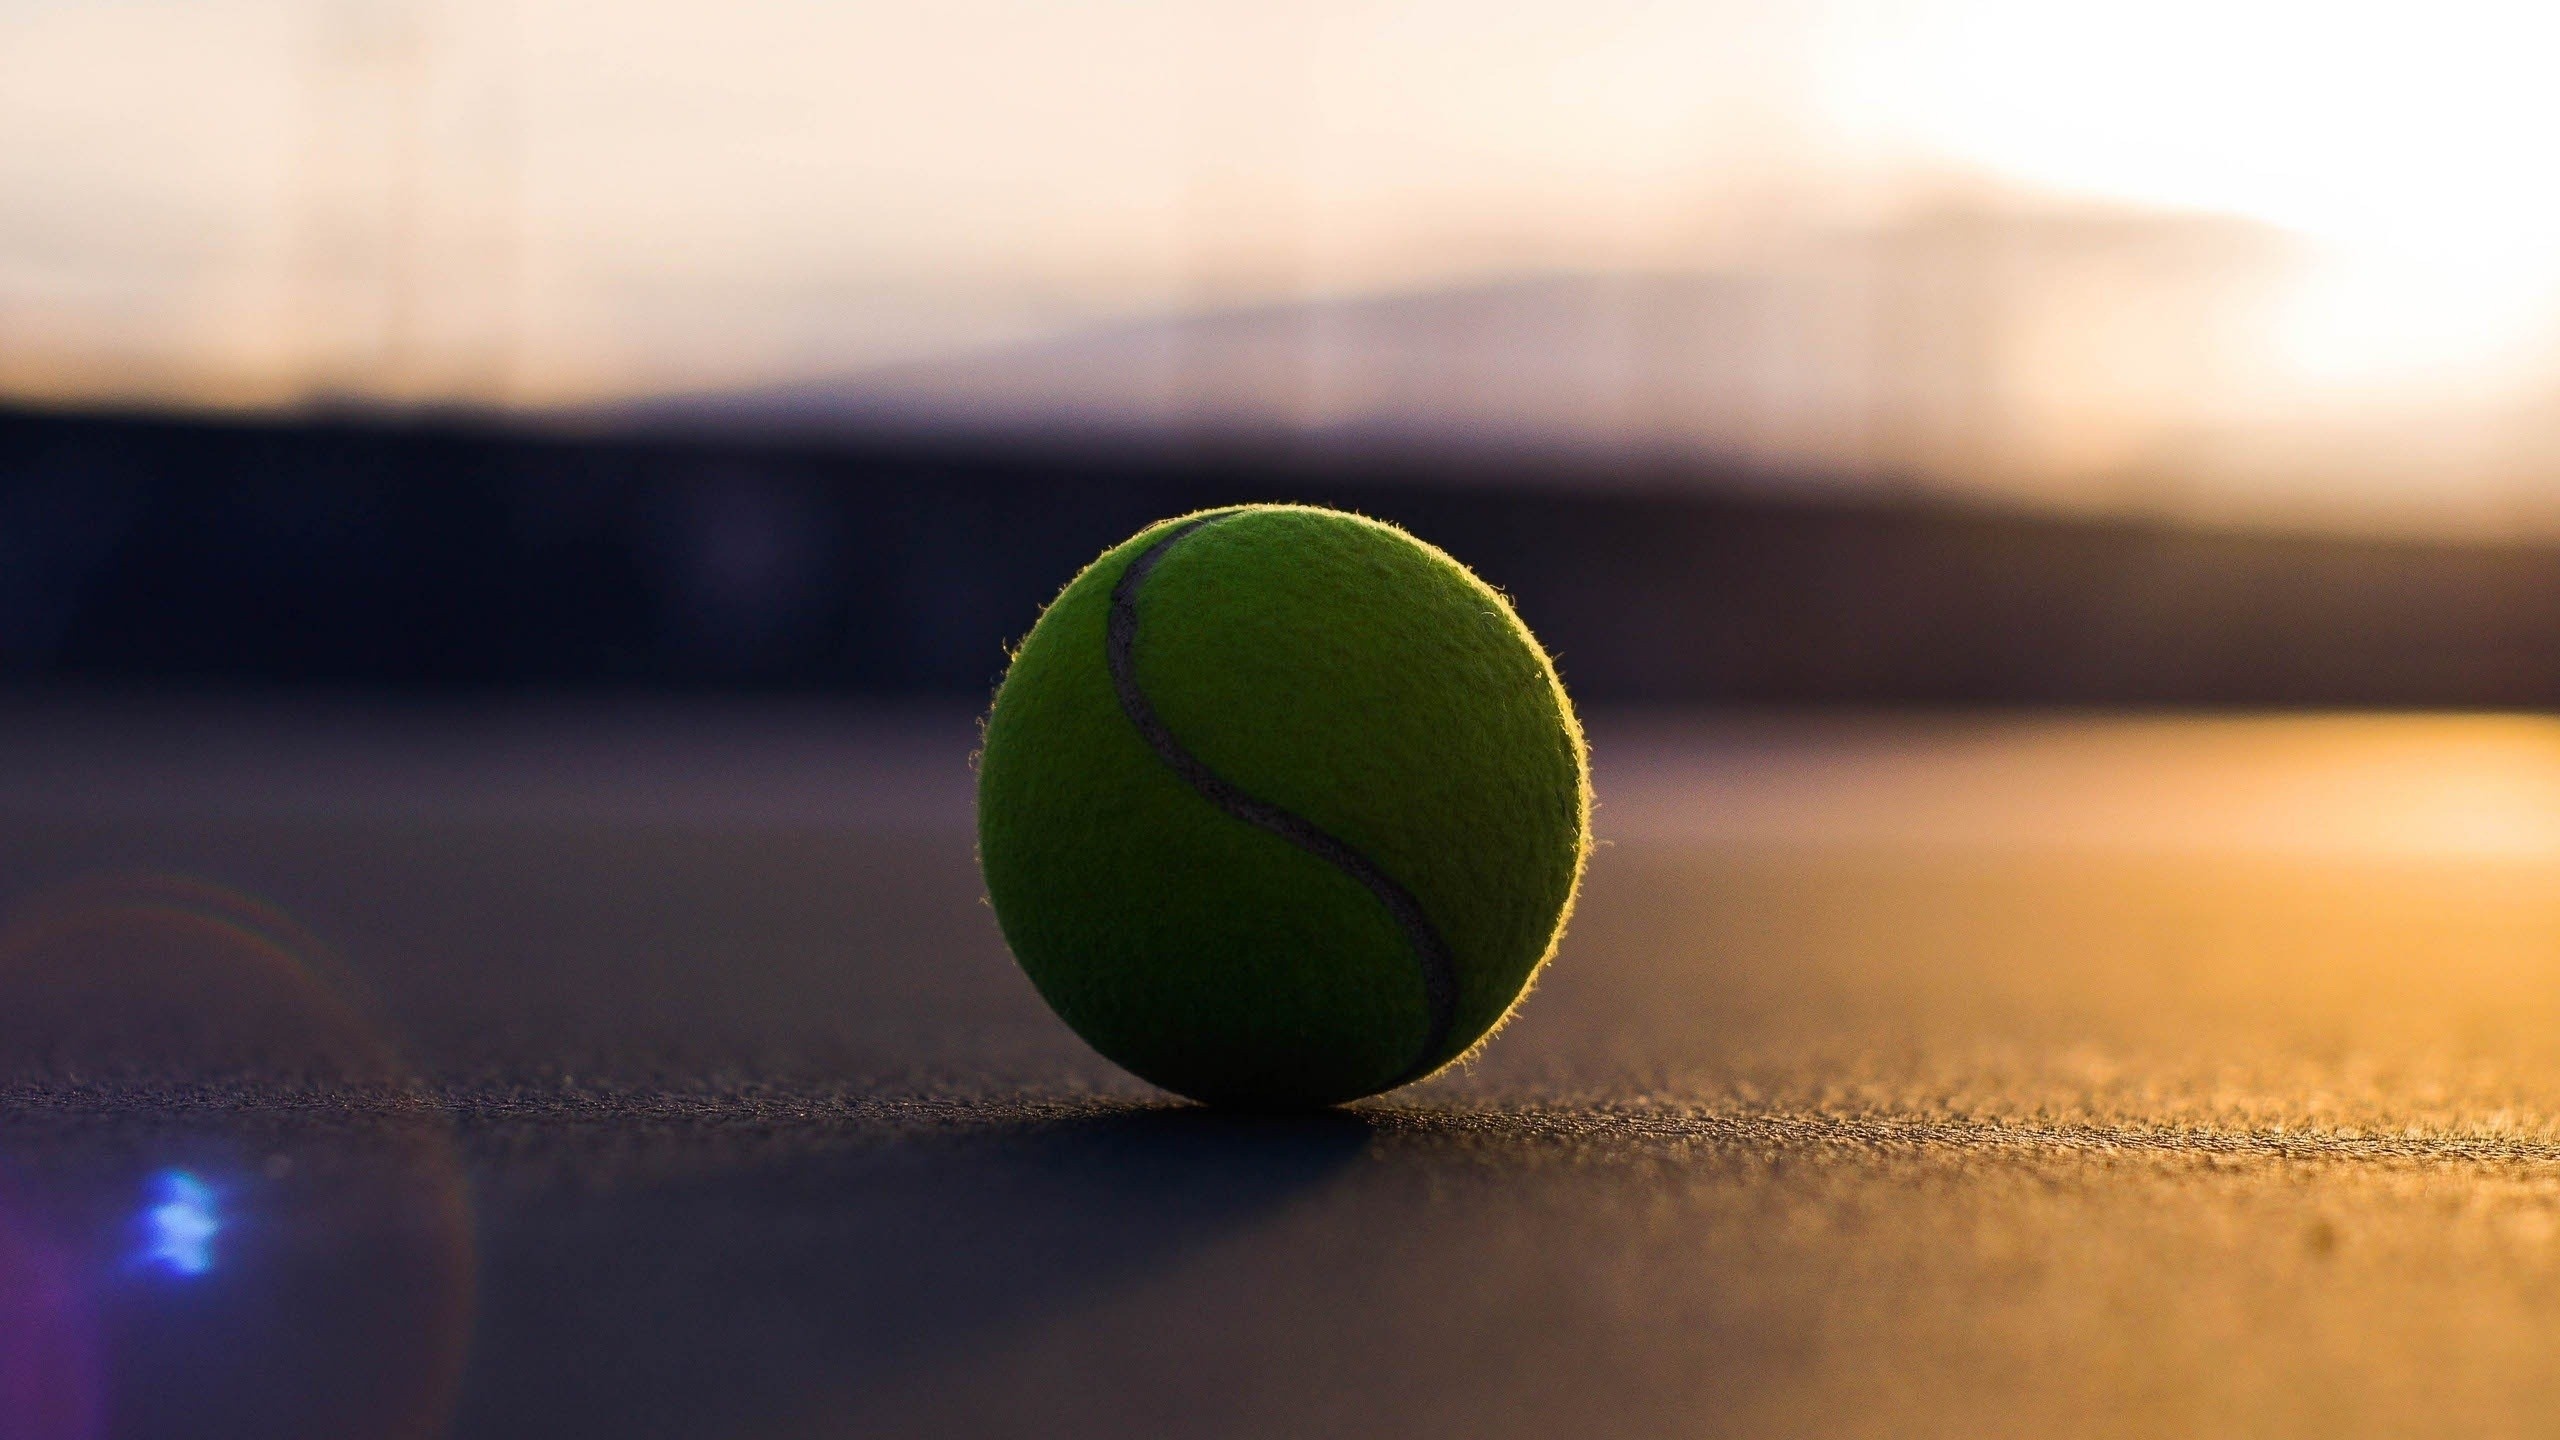 bola fondos de pantalla hd,verde,pelota de tenis,tenis,pista de tenis,equipo deportivo